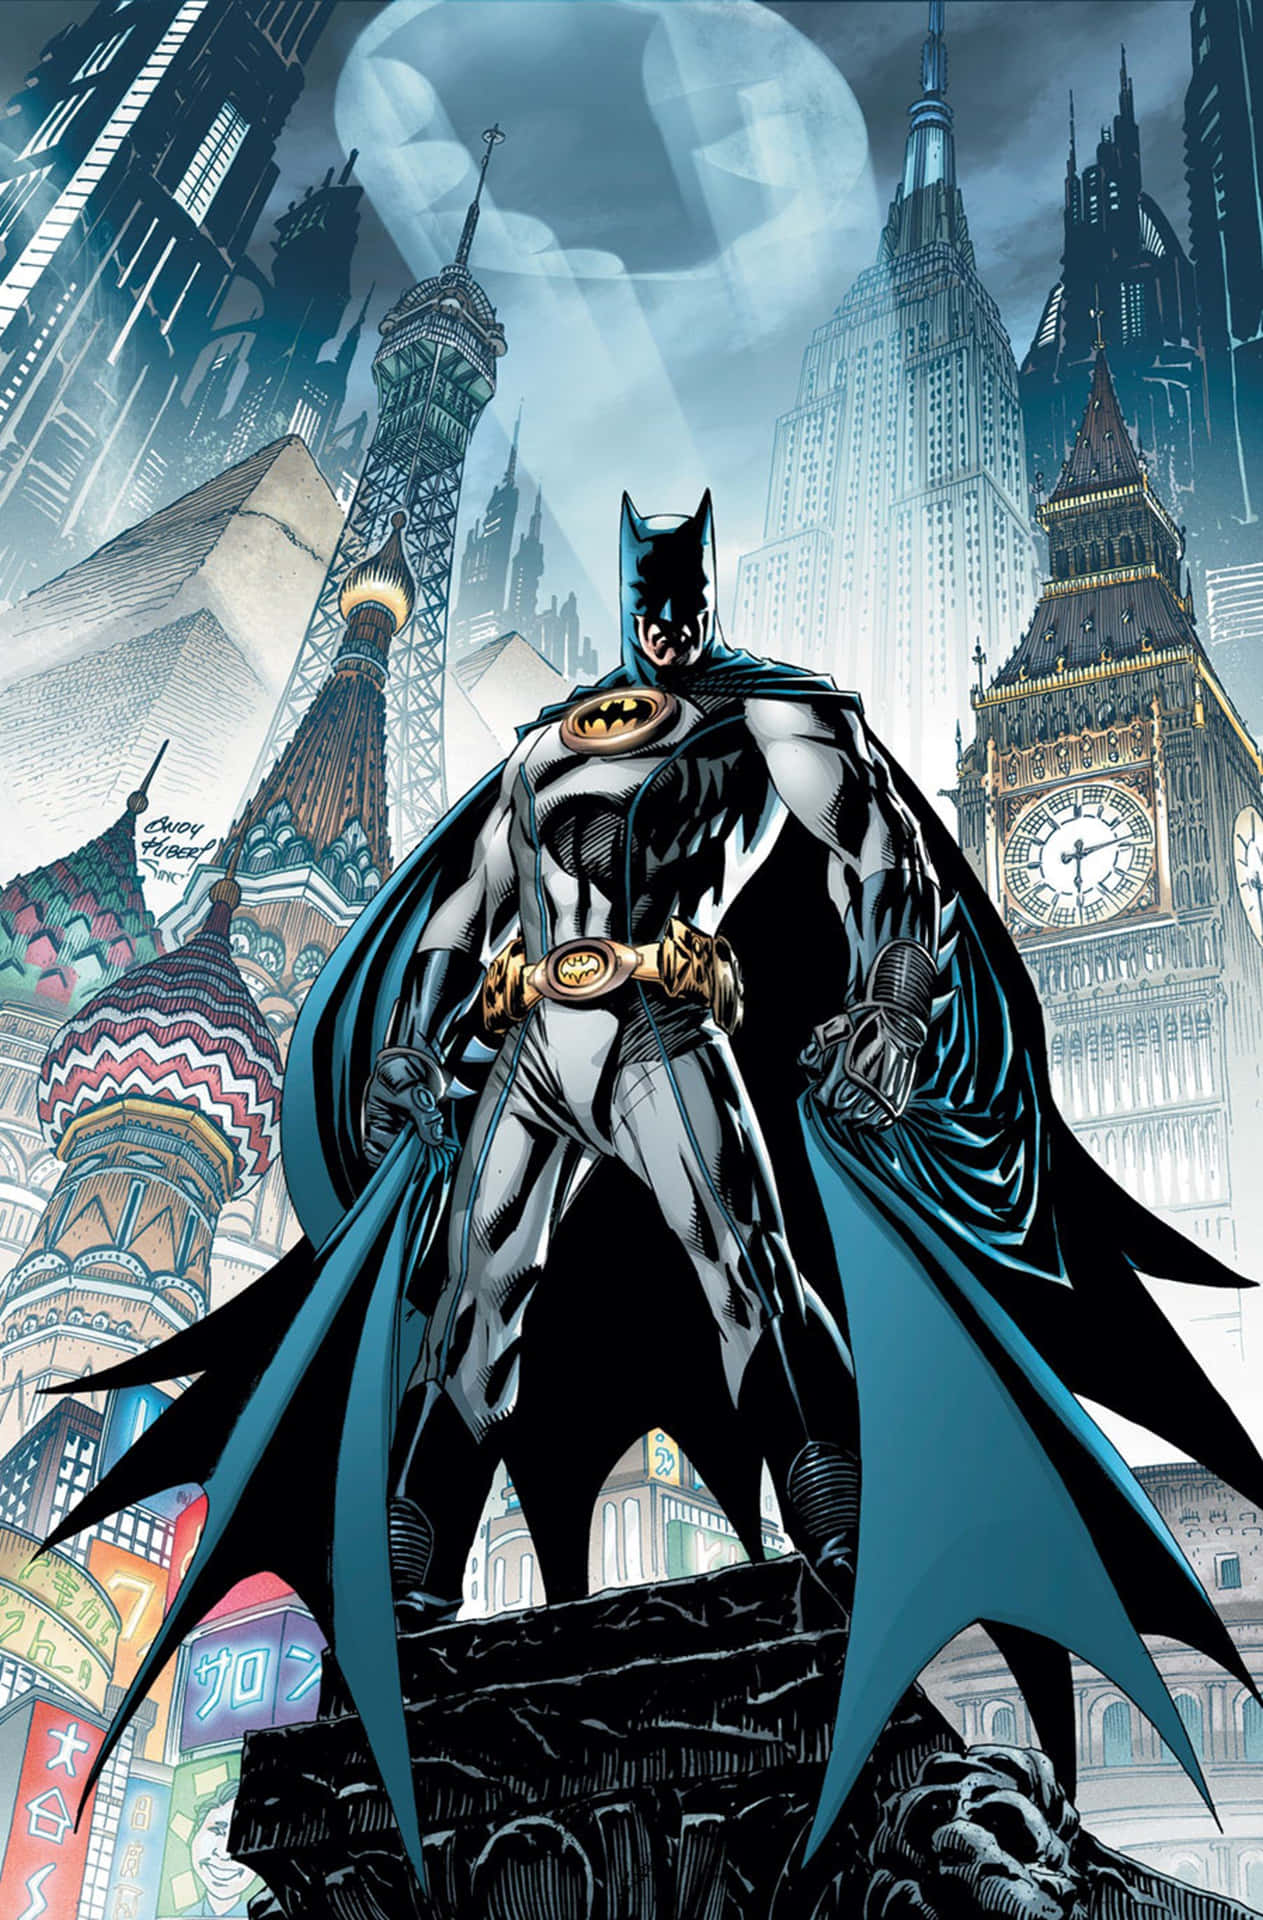 !Vis din Batman-stolthet med en sej Batman iPhone Tapet! Wallpaper